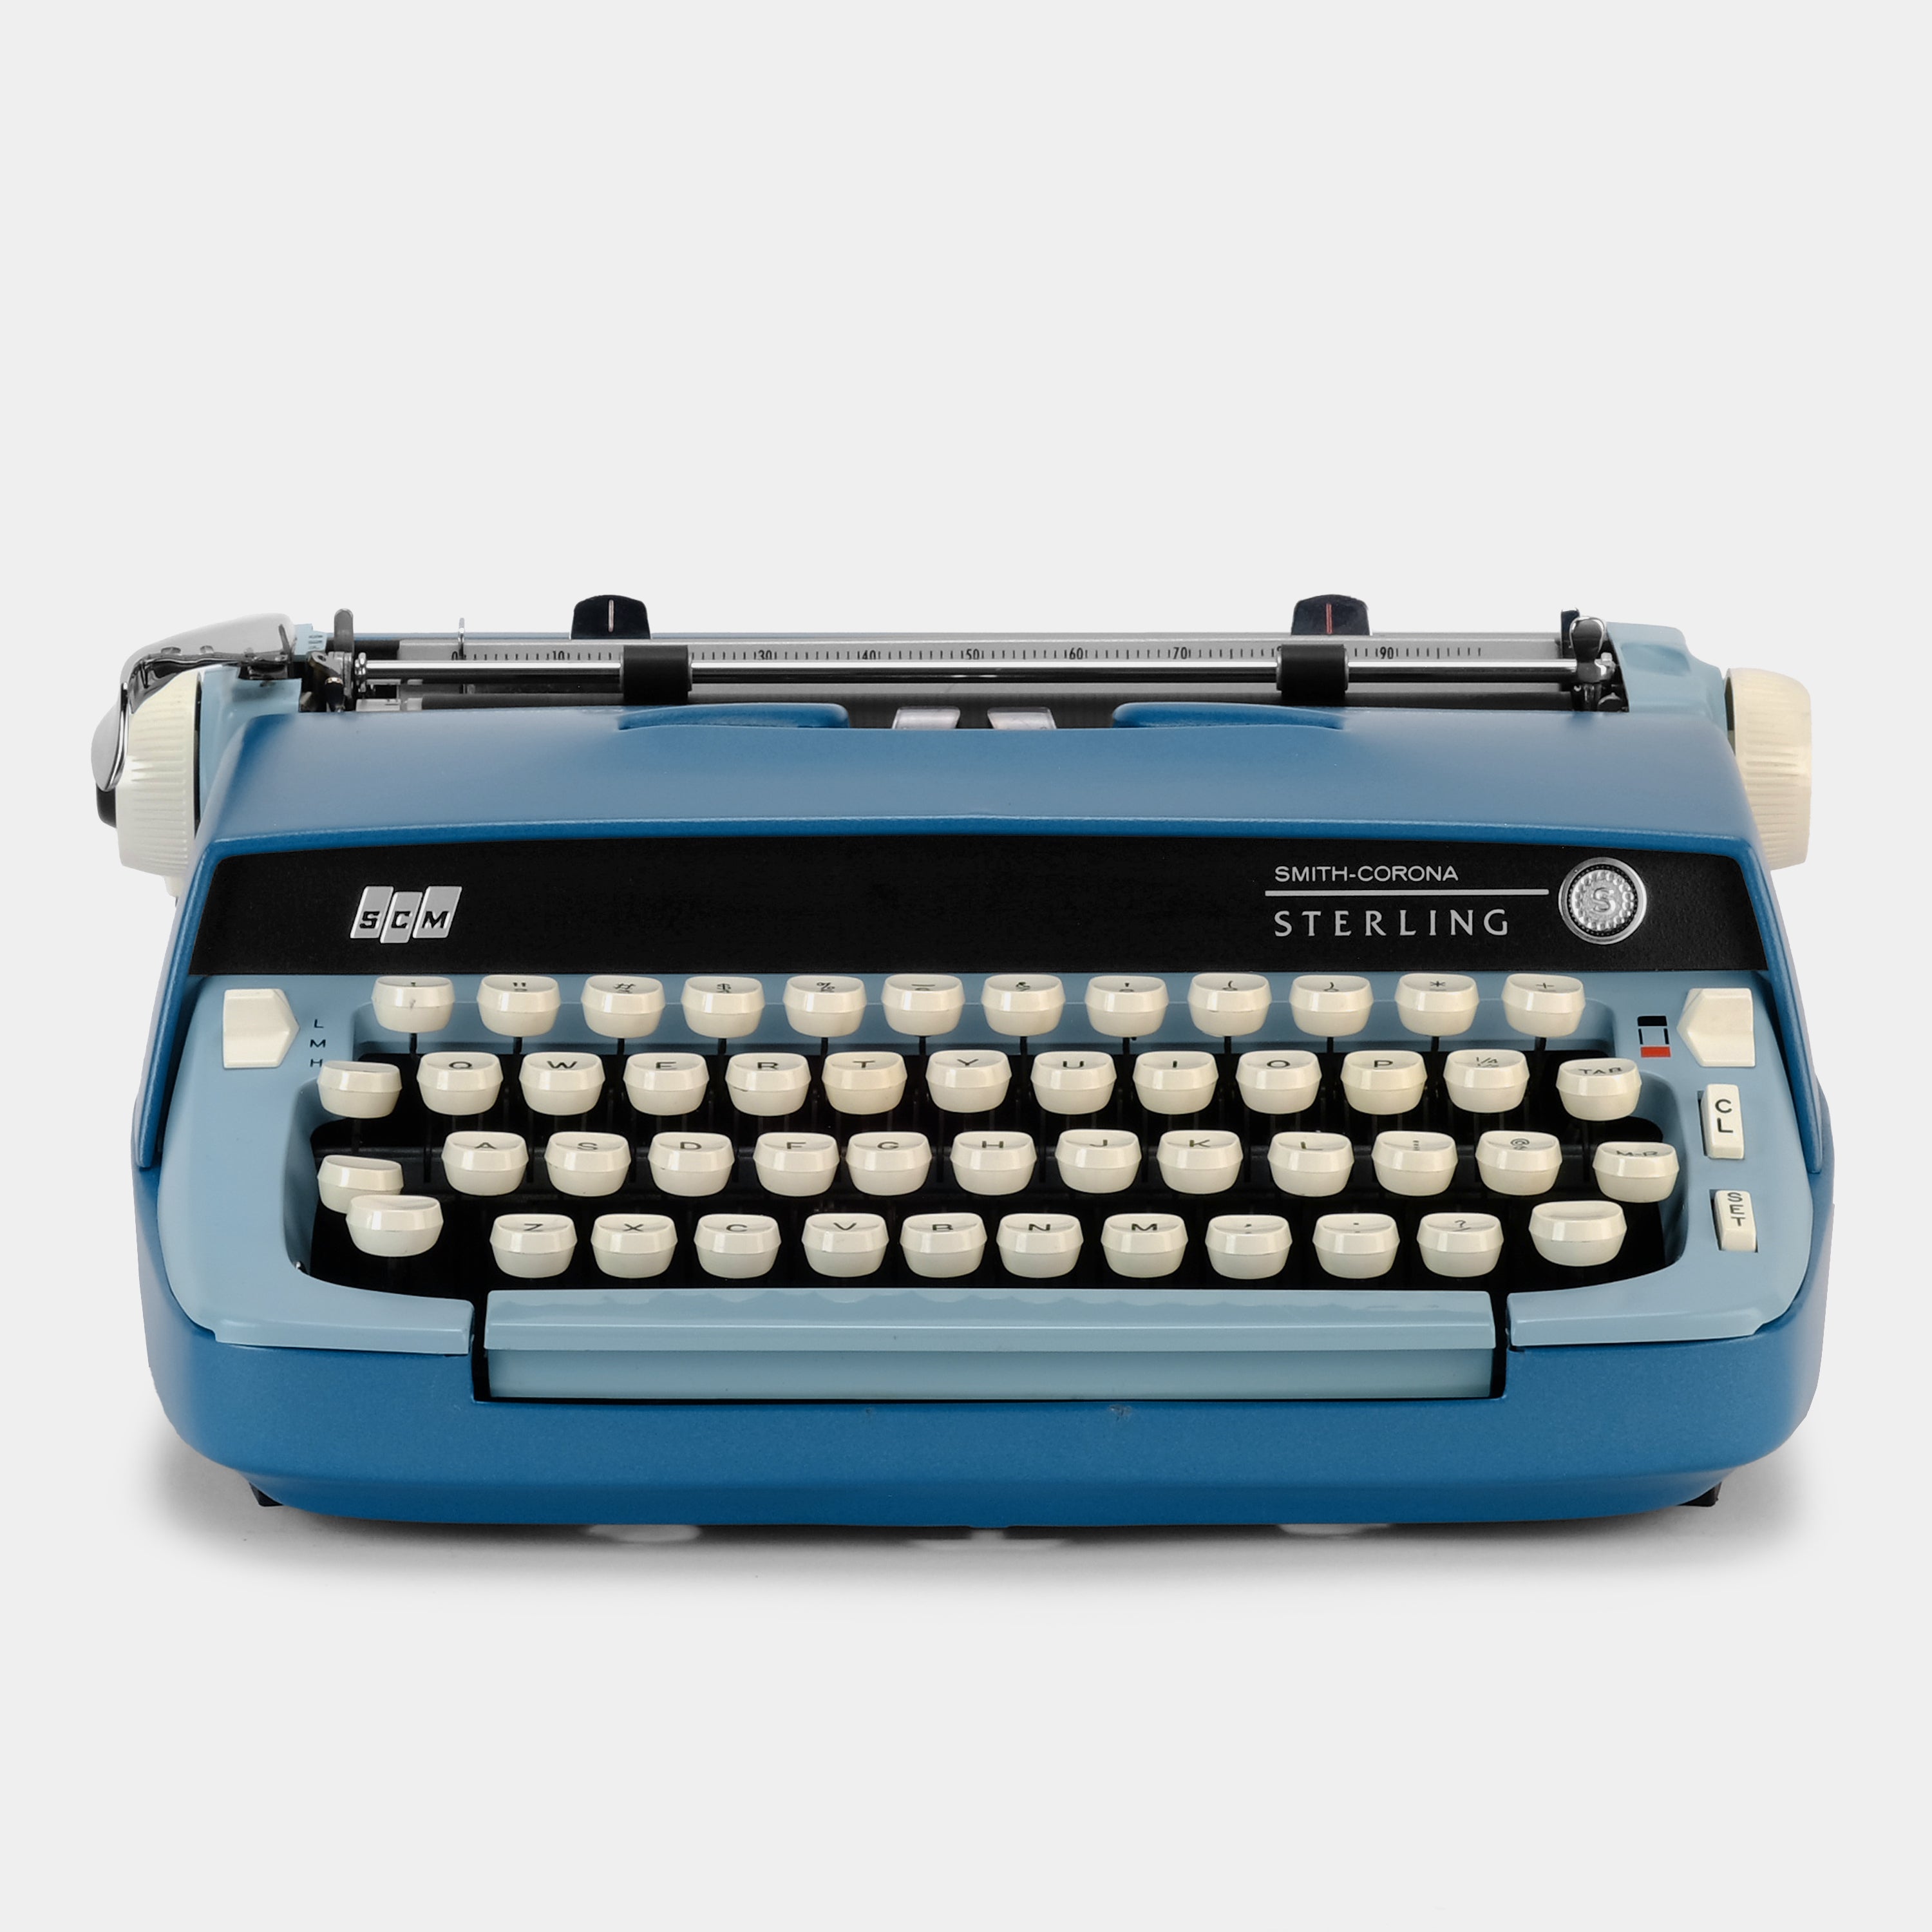 Smith-Corona Sterling Sky Blue Manual Typewriter